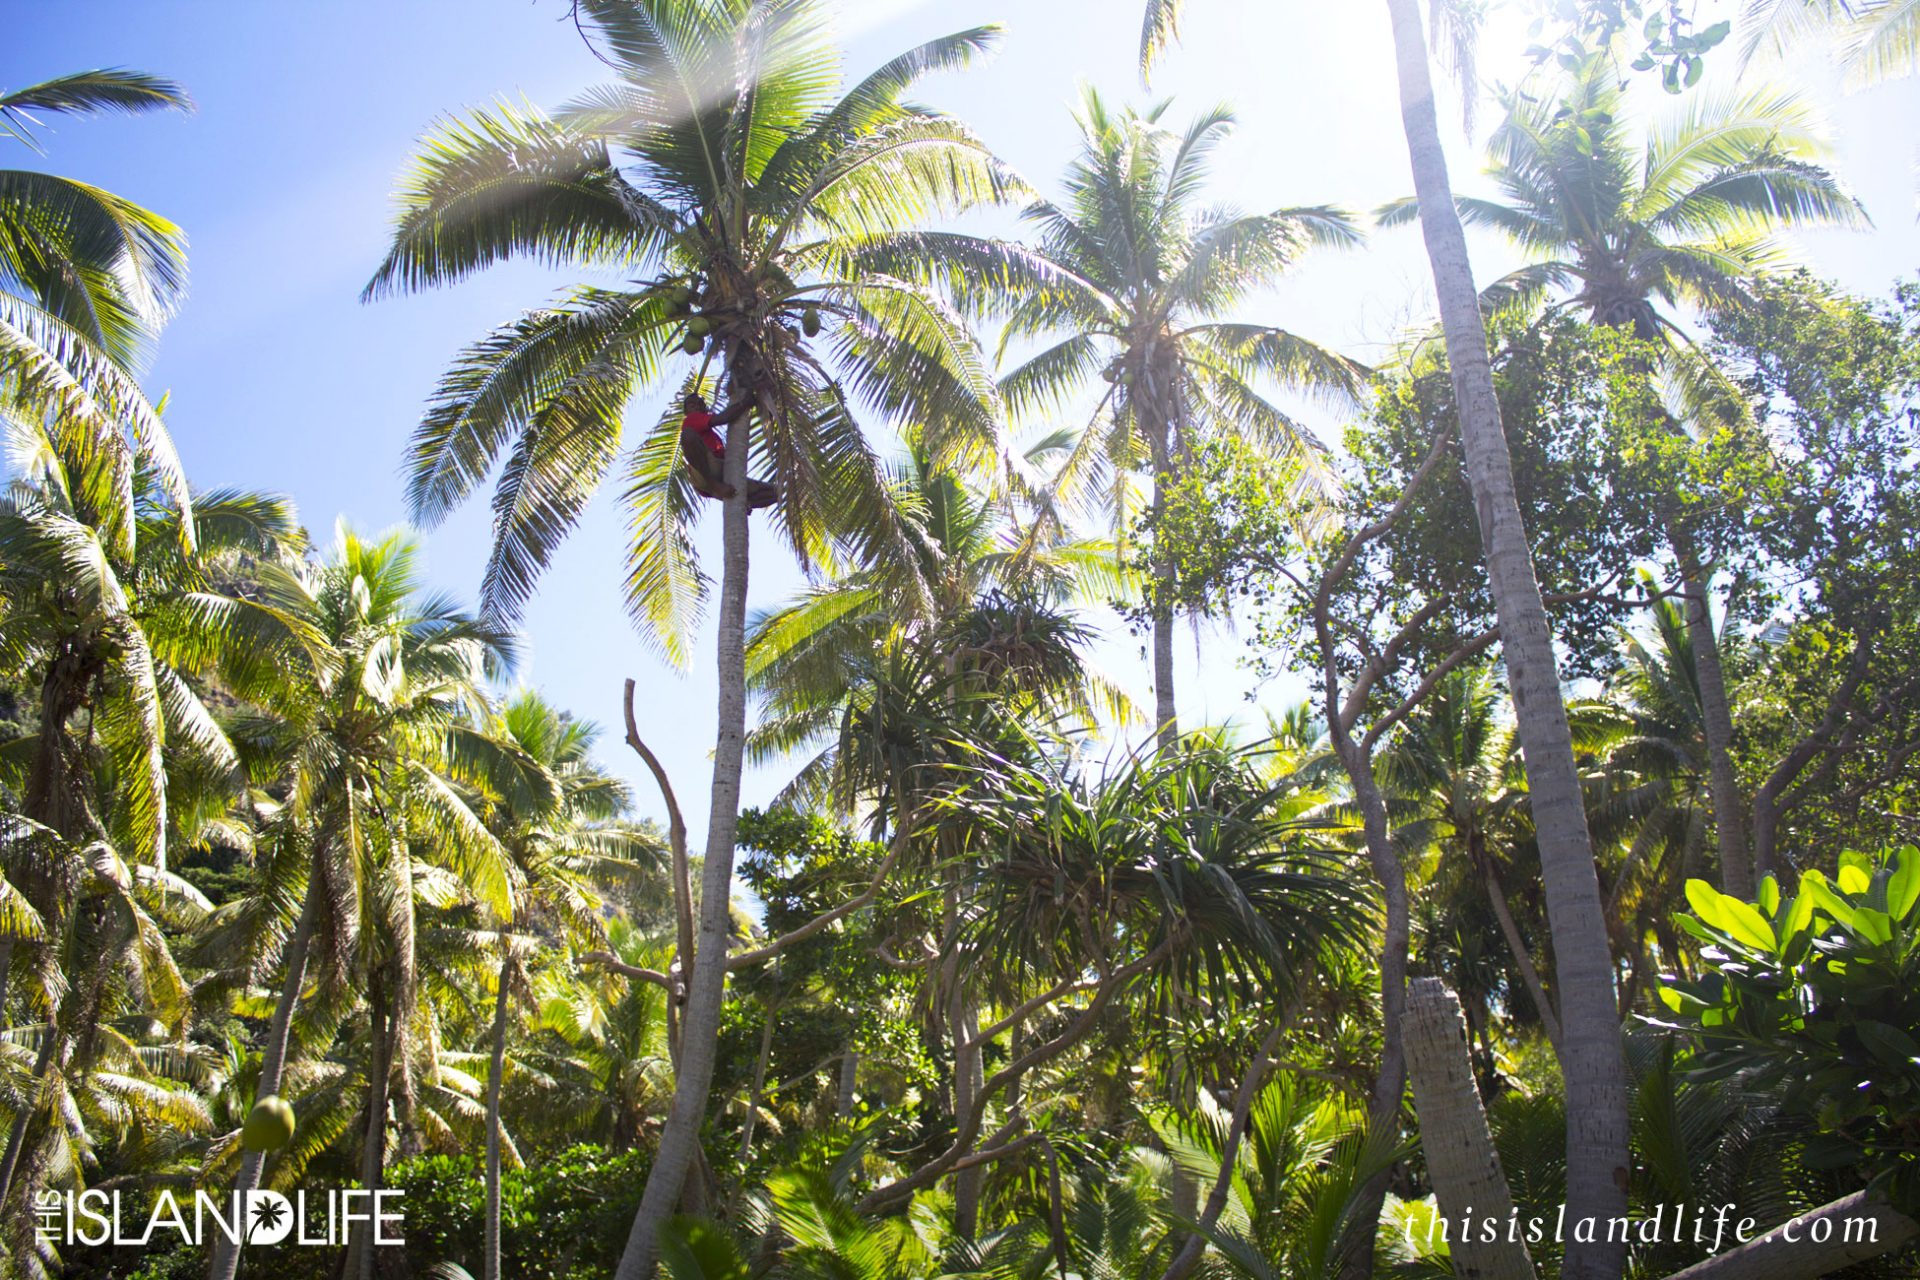 THIS ISLAND LIFE |Cast Away Island (Monuriki Island), Fiji